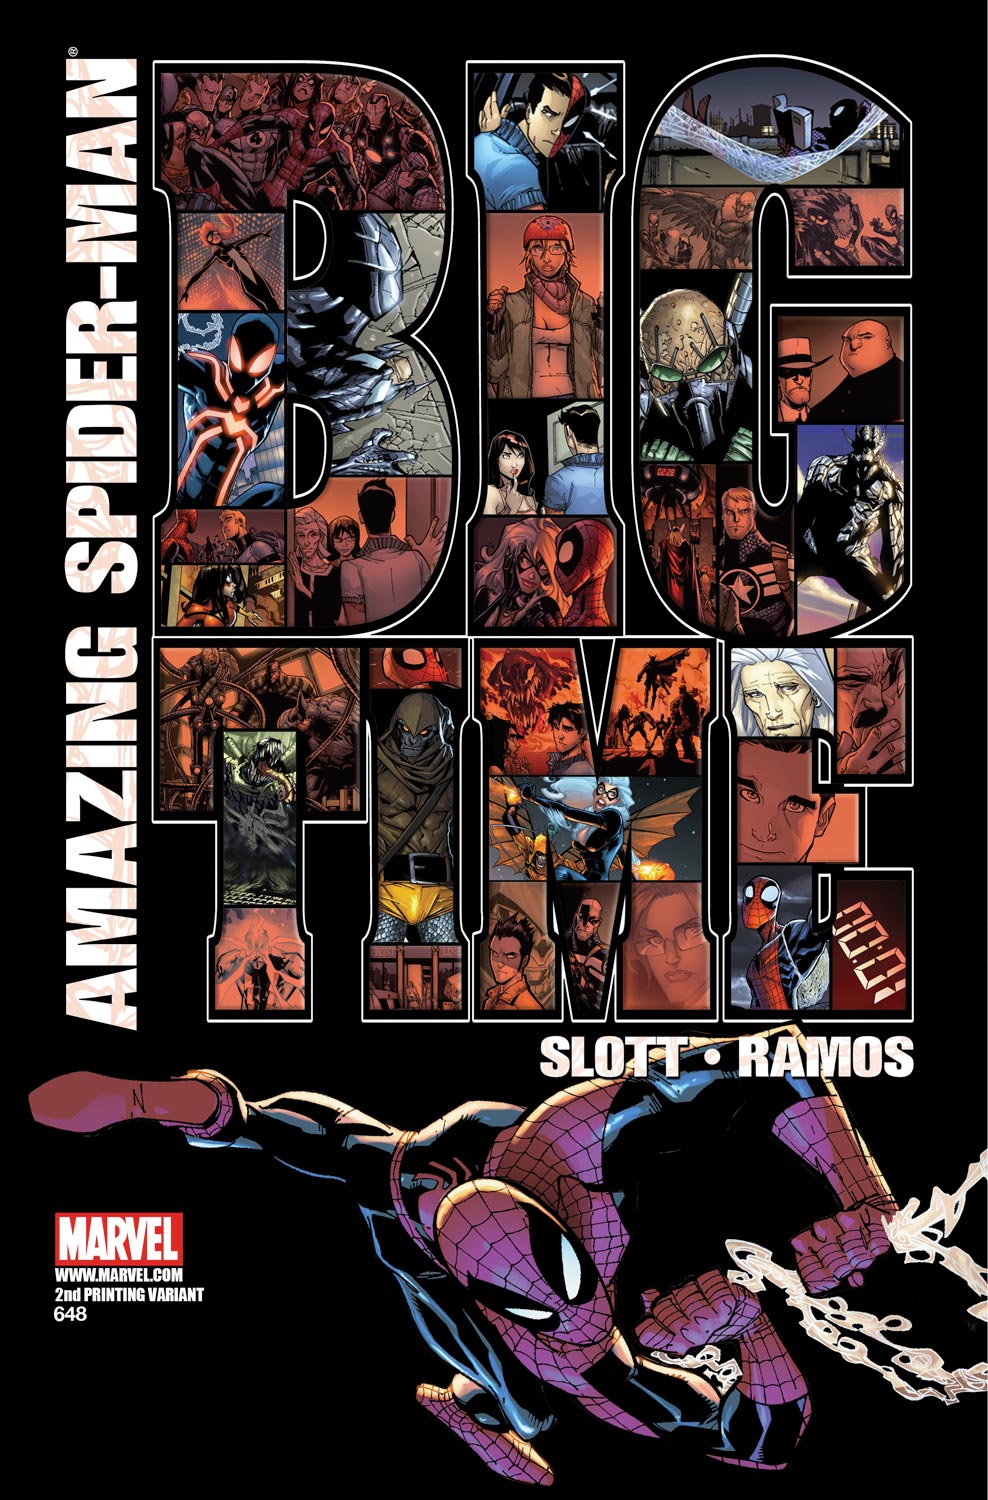 Amazing Spider-Man (1999) #648 (2ND PRINTING VARIANT)